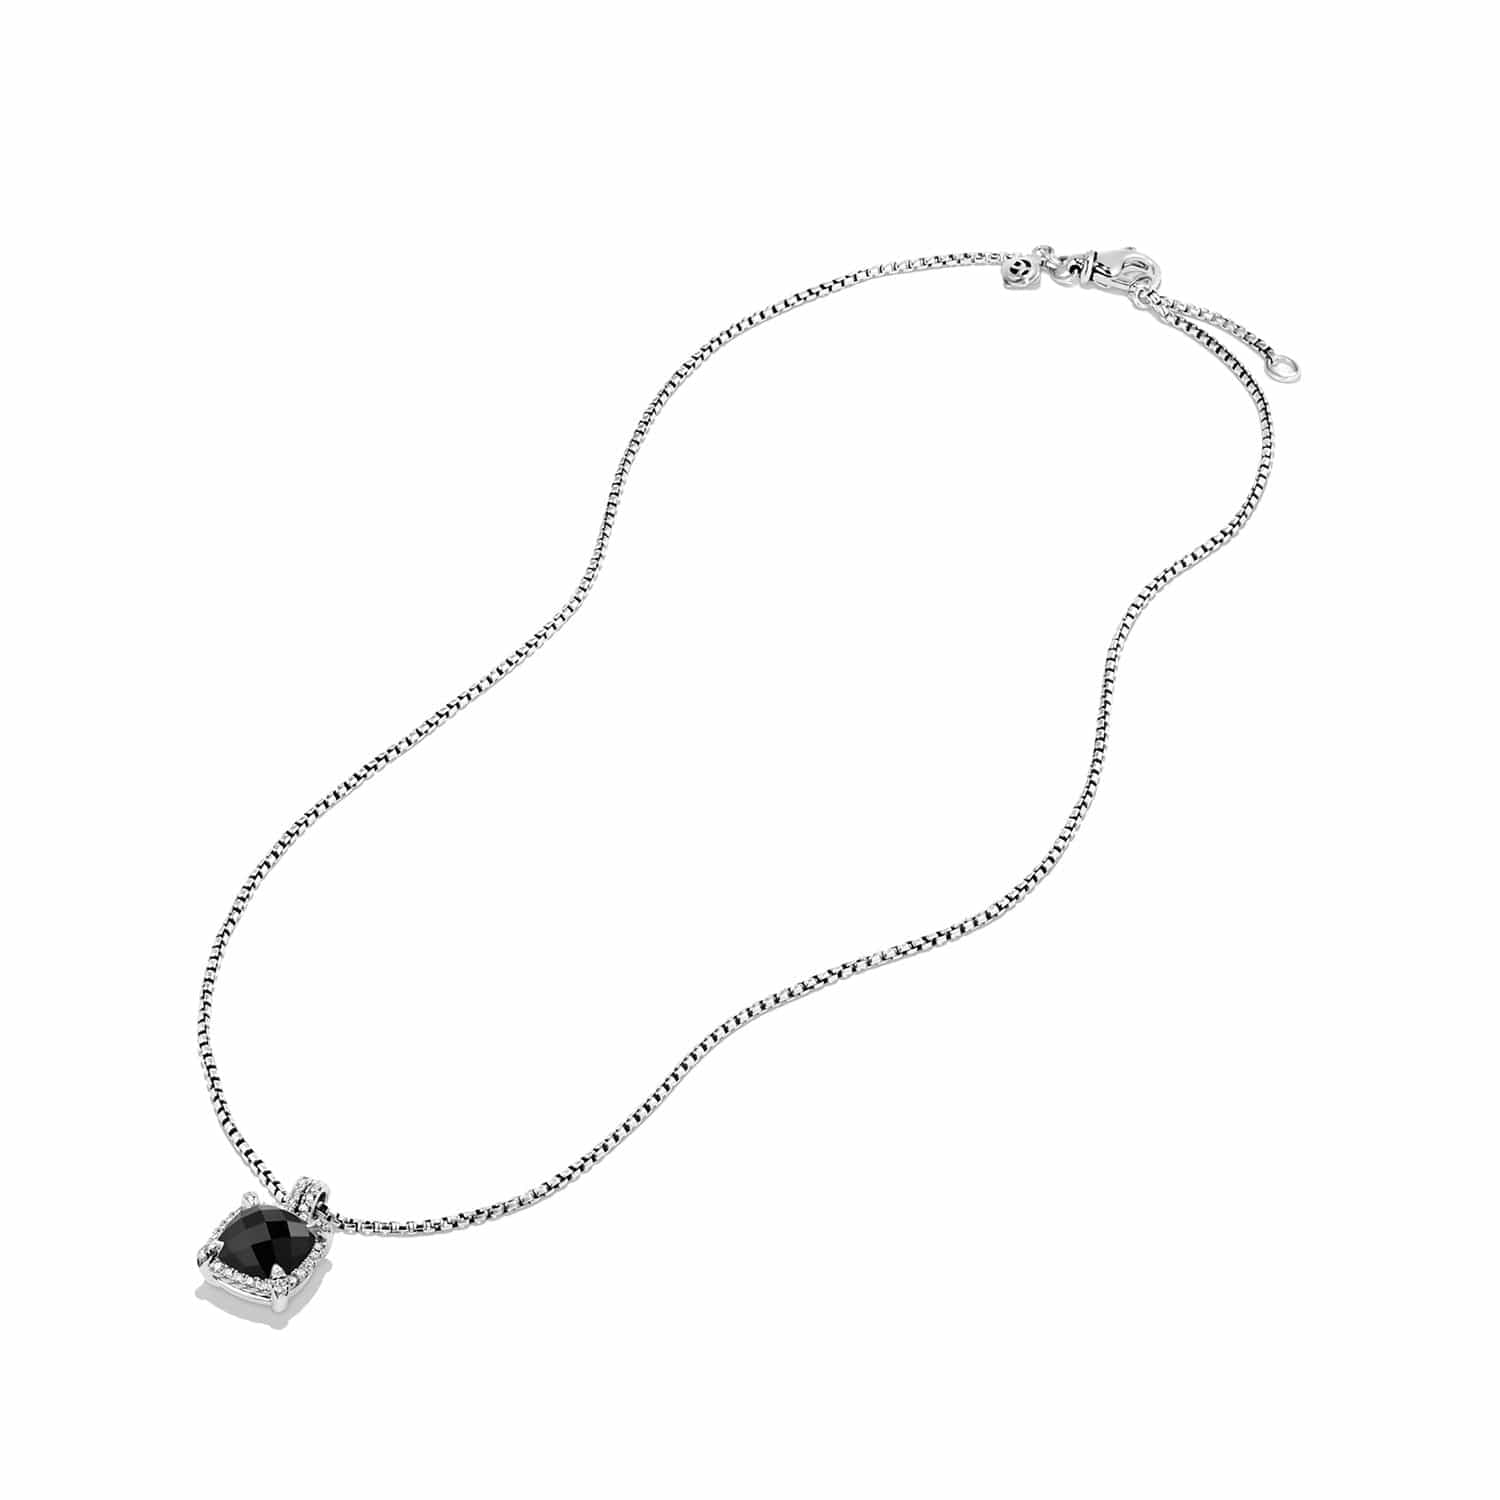 Chatelaine Pave Bezel Pendant Necklace with Black Onyx and Diamonds, 9mm